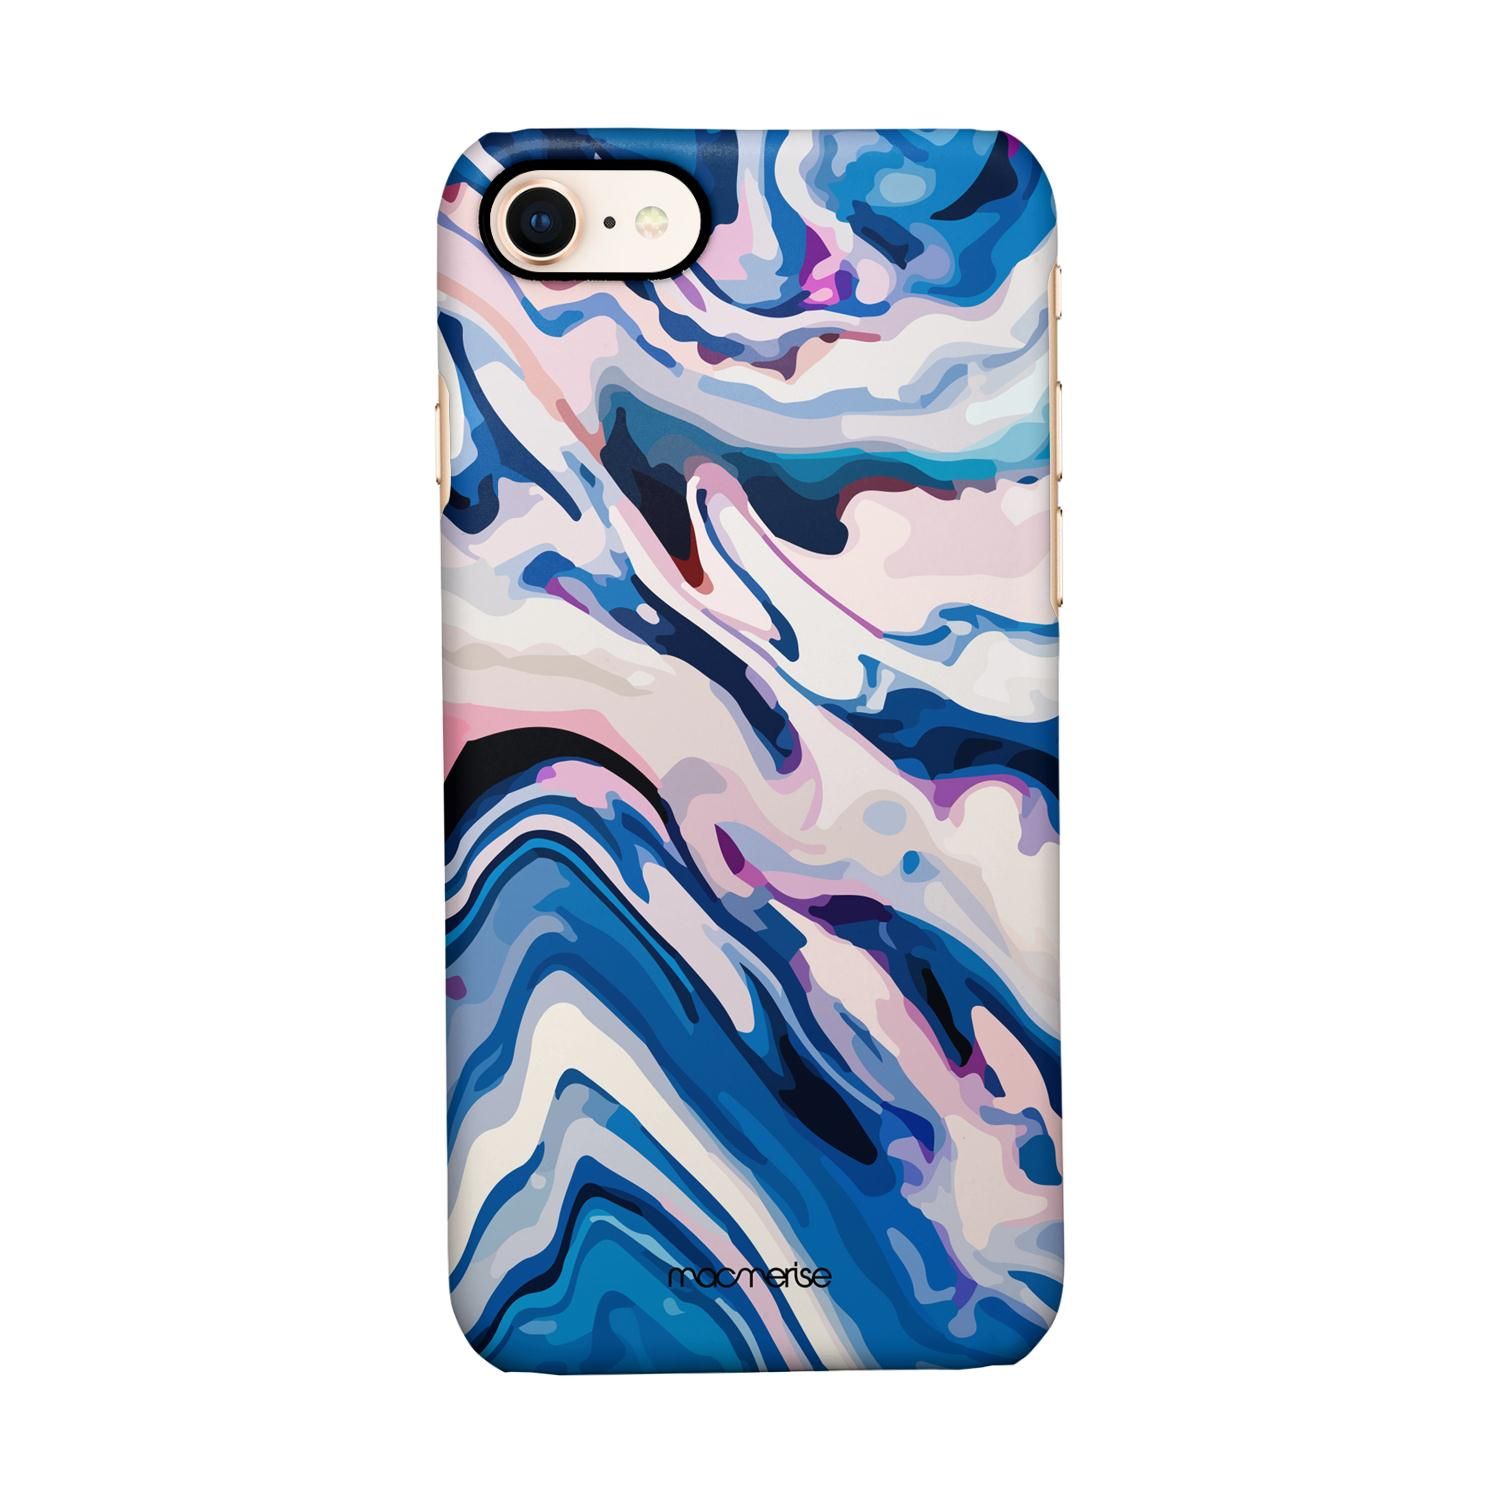 Buy Liquid Funk Pinkblue - Sleek Phone Case for iPhone 8 Online